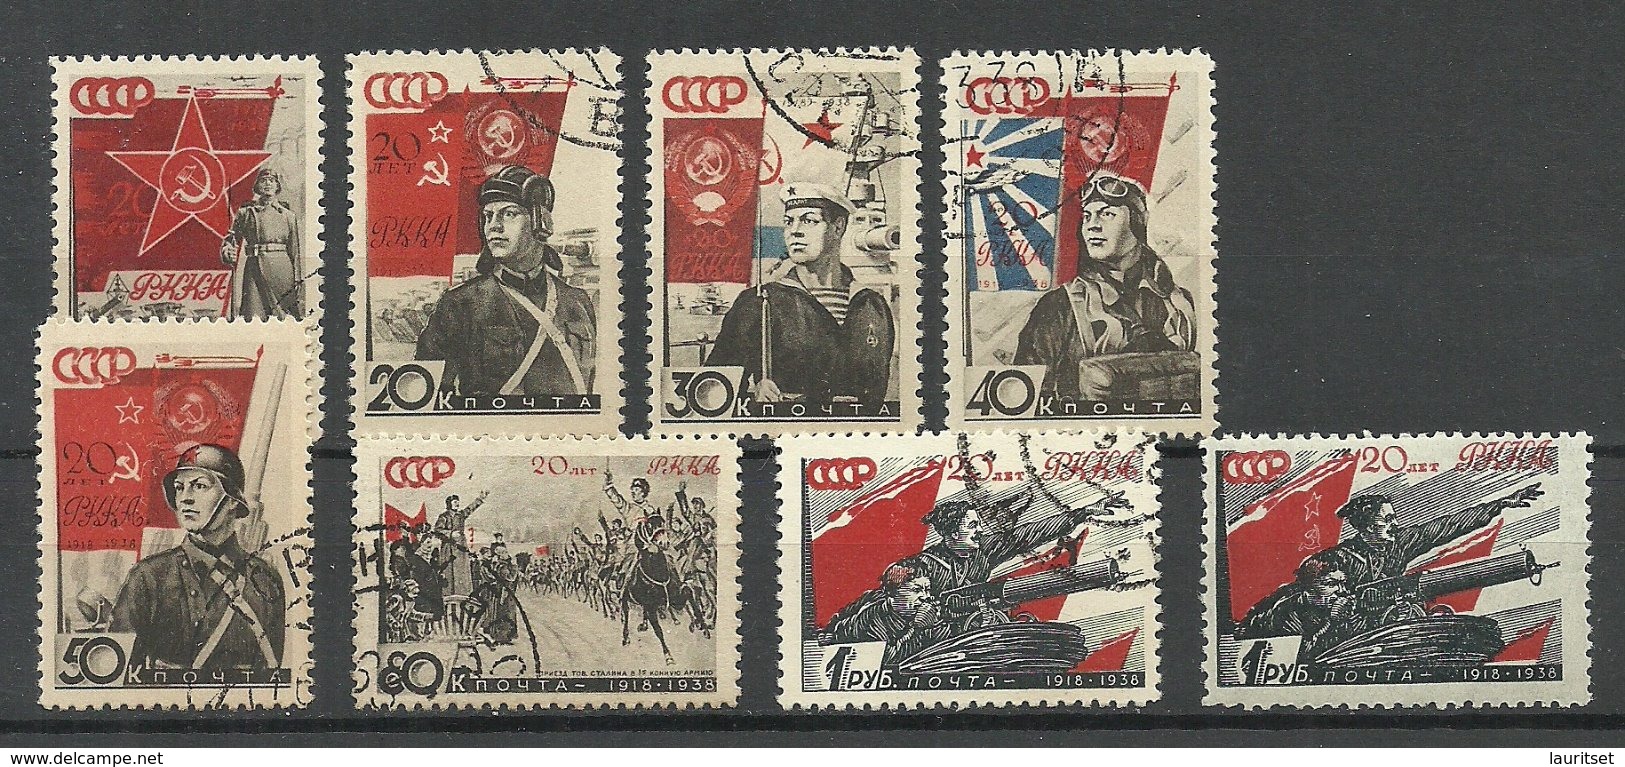 RUSSLAND RUSSIA 1938 Michel 588 - 594 O + Michel 594 Thin Paper Type MNH - Usati